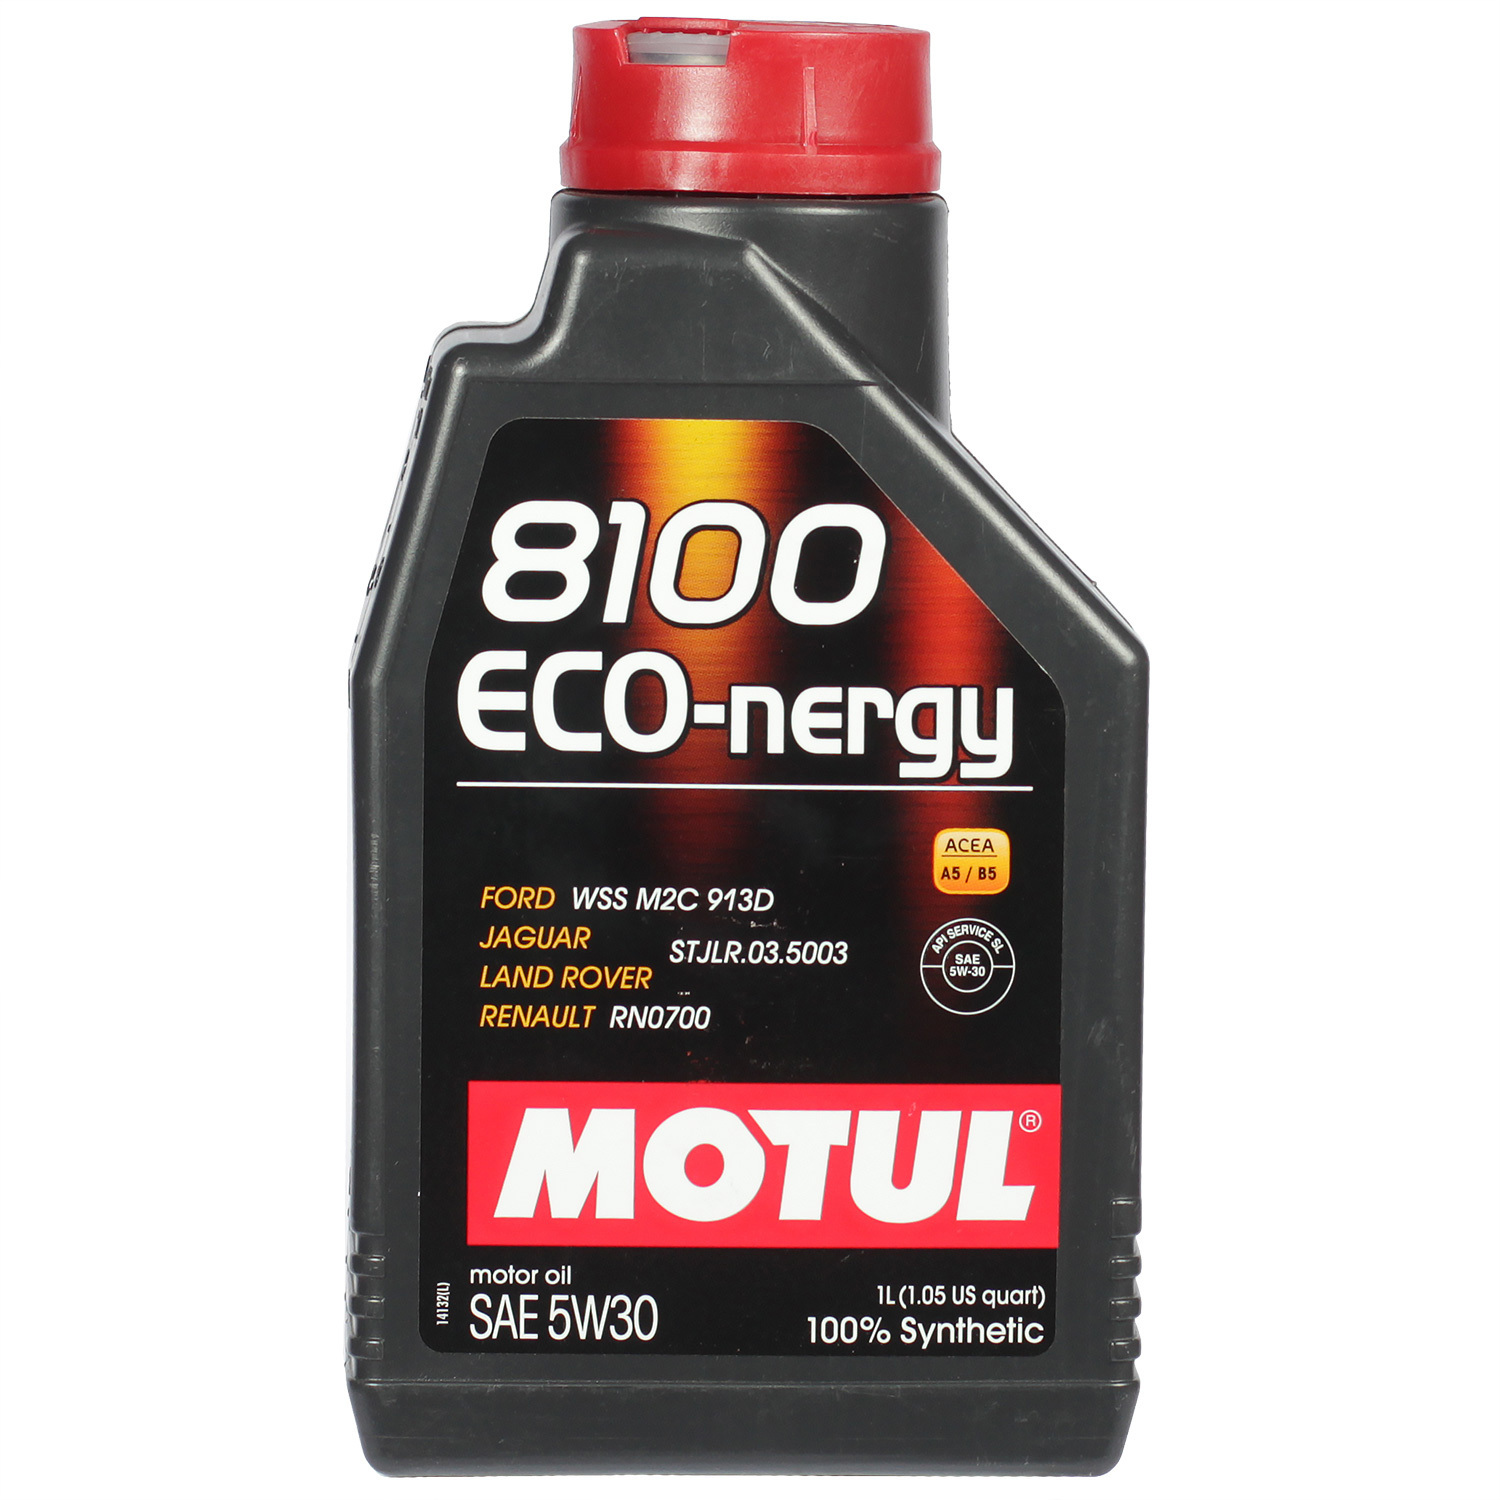 Motul Моторное масло Motul 8100 Eco-nergy 5W-30, 1 л motul моторное масло motul 8100 x cess gen2 5w 40 4 л